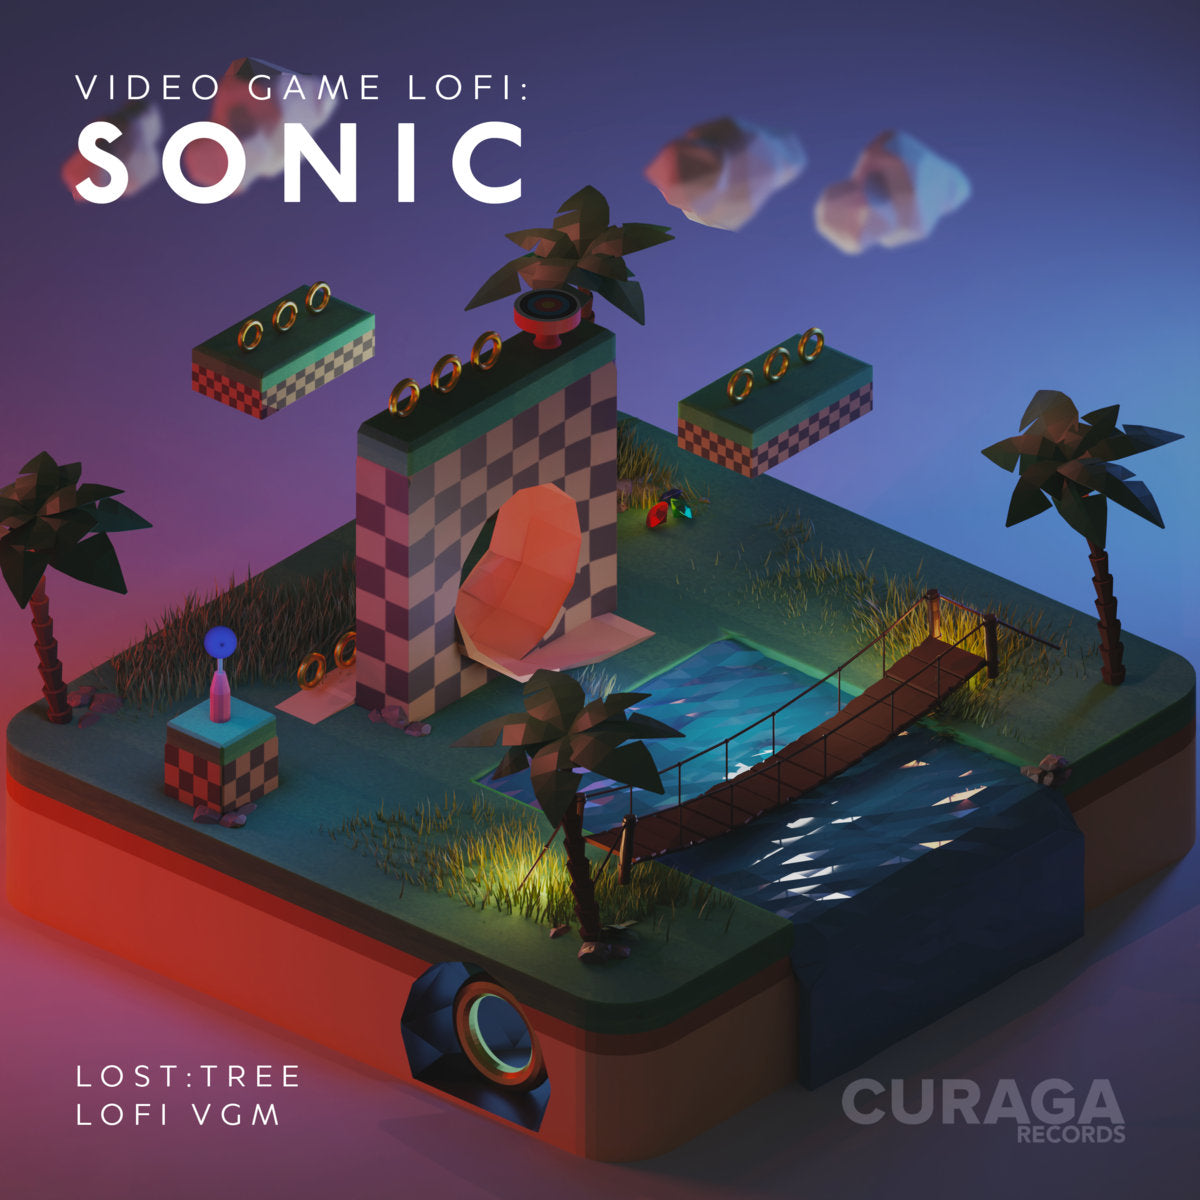 CURE-0009-V - lost:tree - Video Game LoFi: Sonic